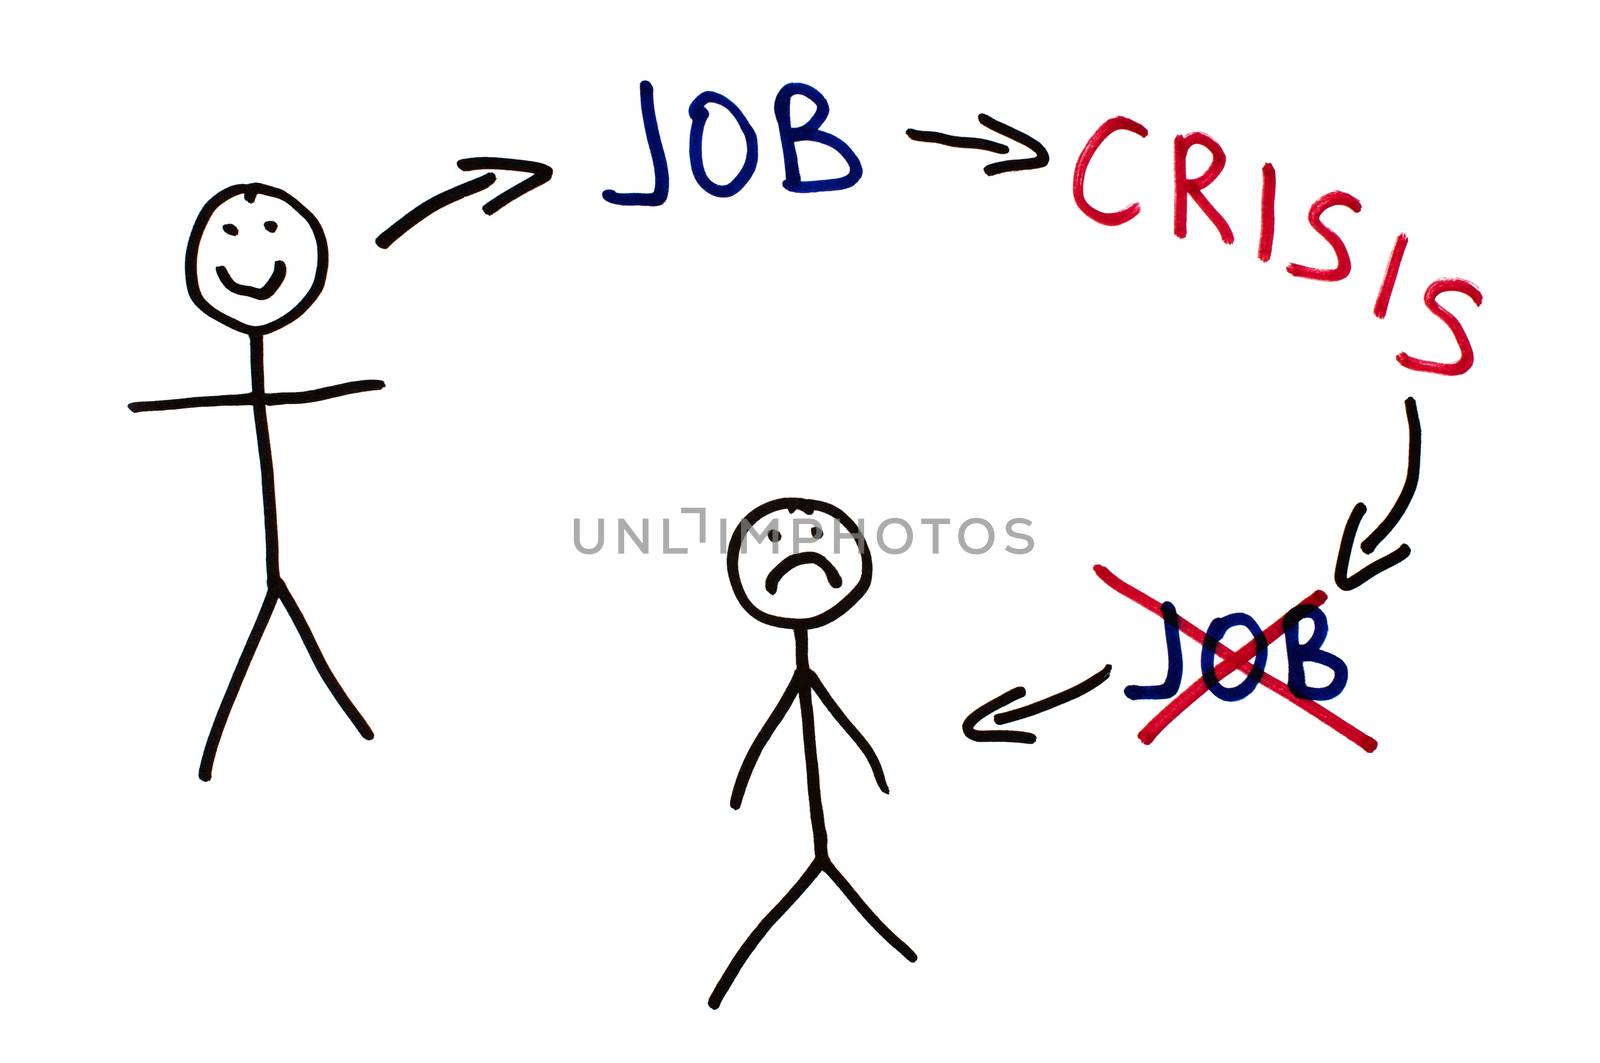 Job and crisis conception illustration by deyan_georgiev